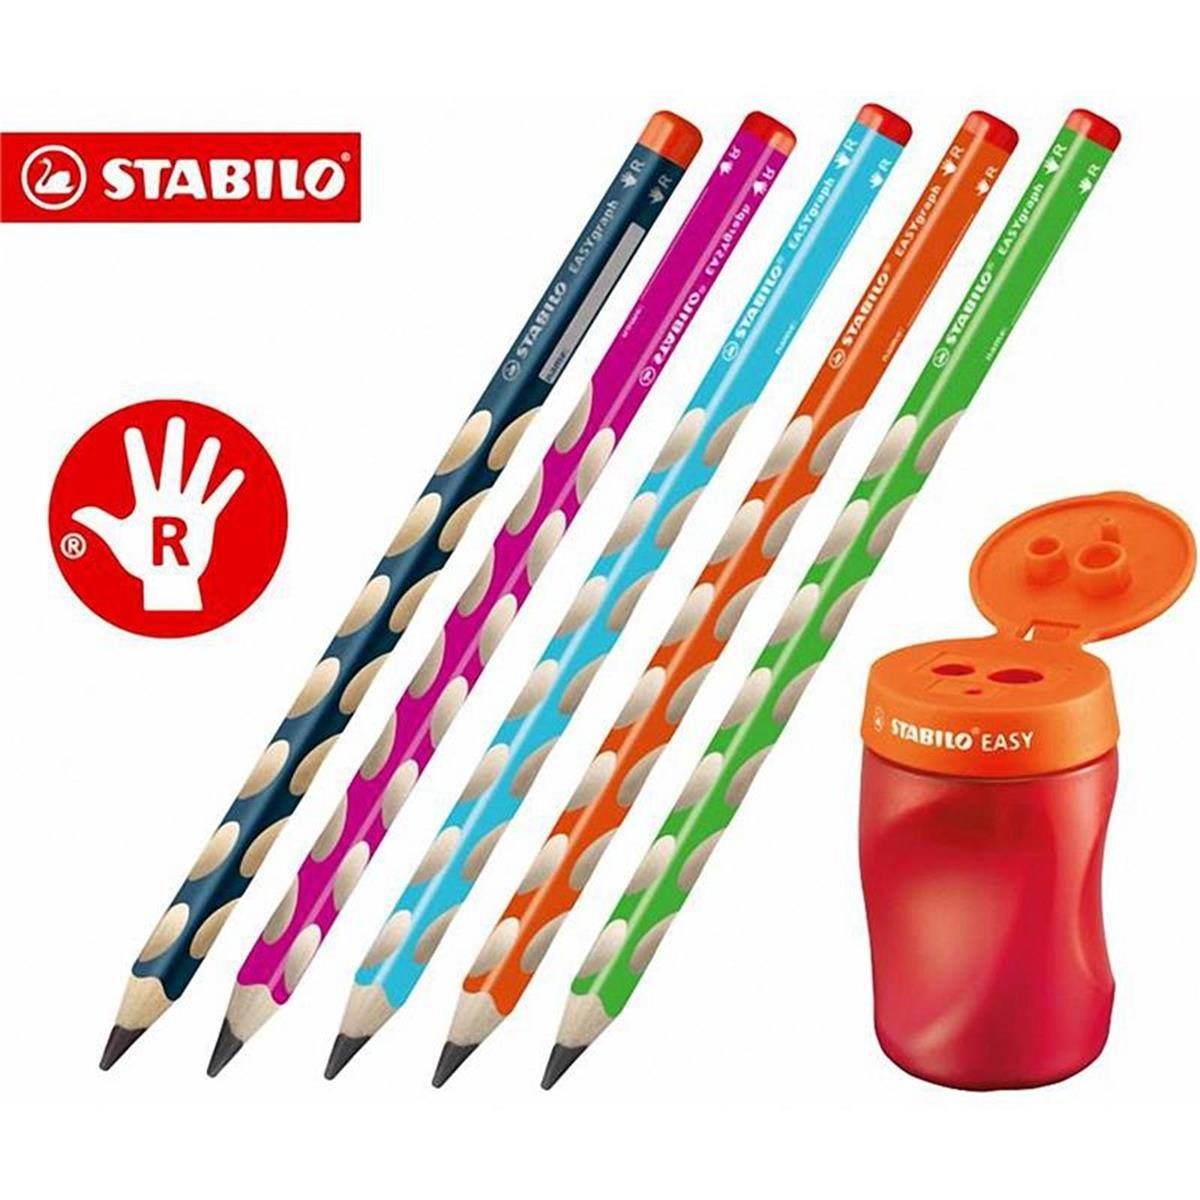 STABILO Buntstift STABILO EASY Set - 3 in 1 - Rechtshänder + 5 Bleistifte